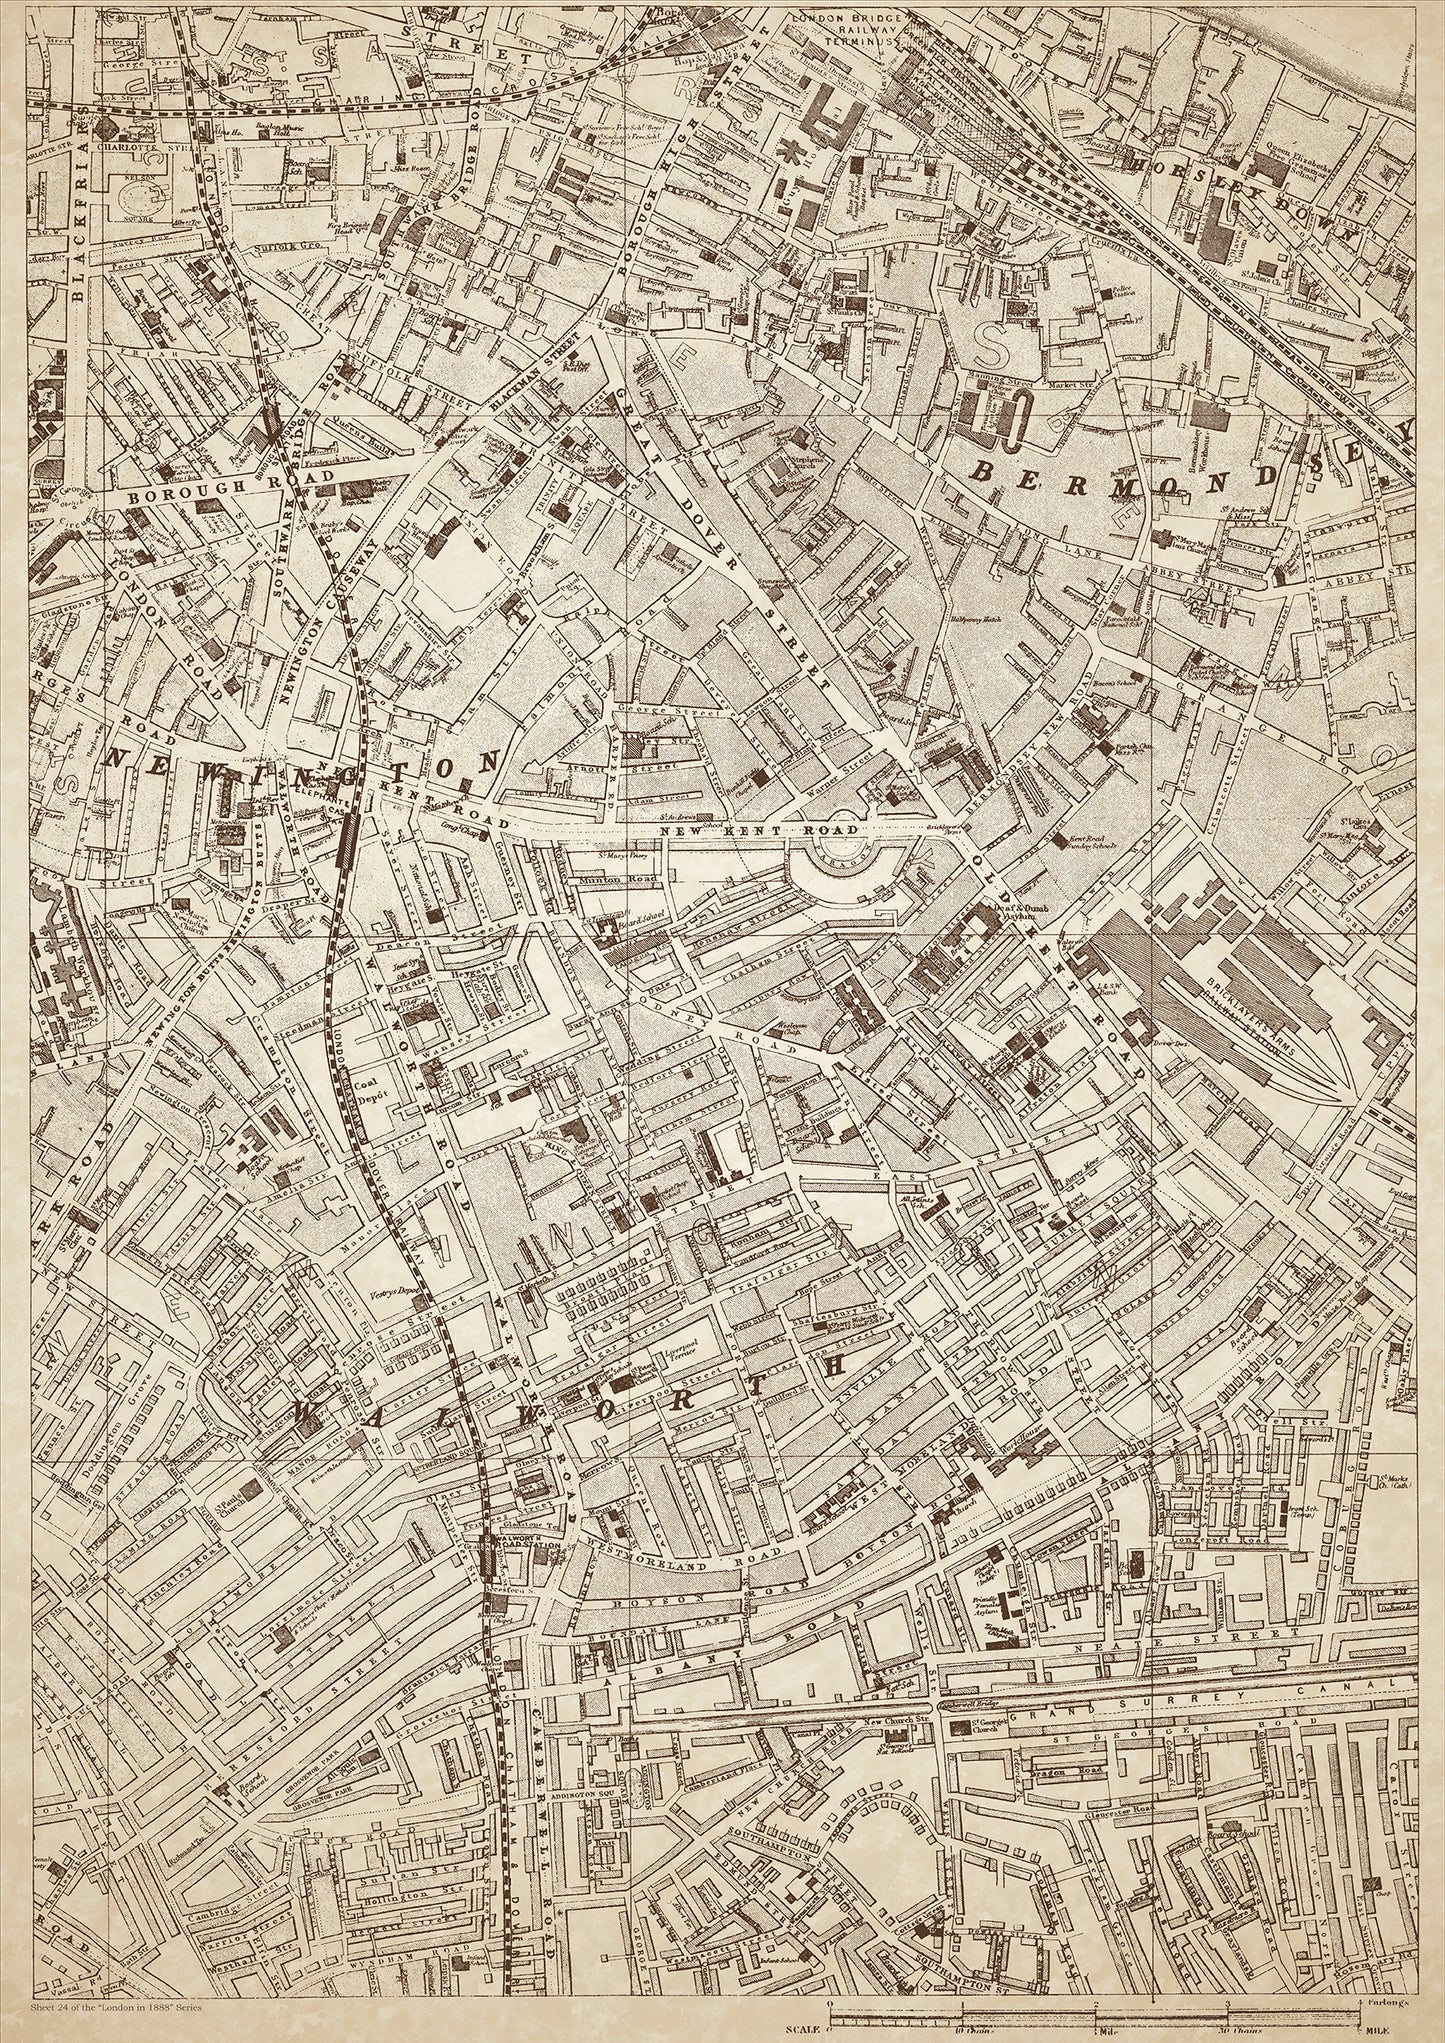 London in 1888 Series - showing Newington, Bermondsey, Walworth, Horsley Down - sheet 24